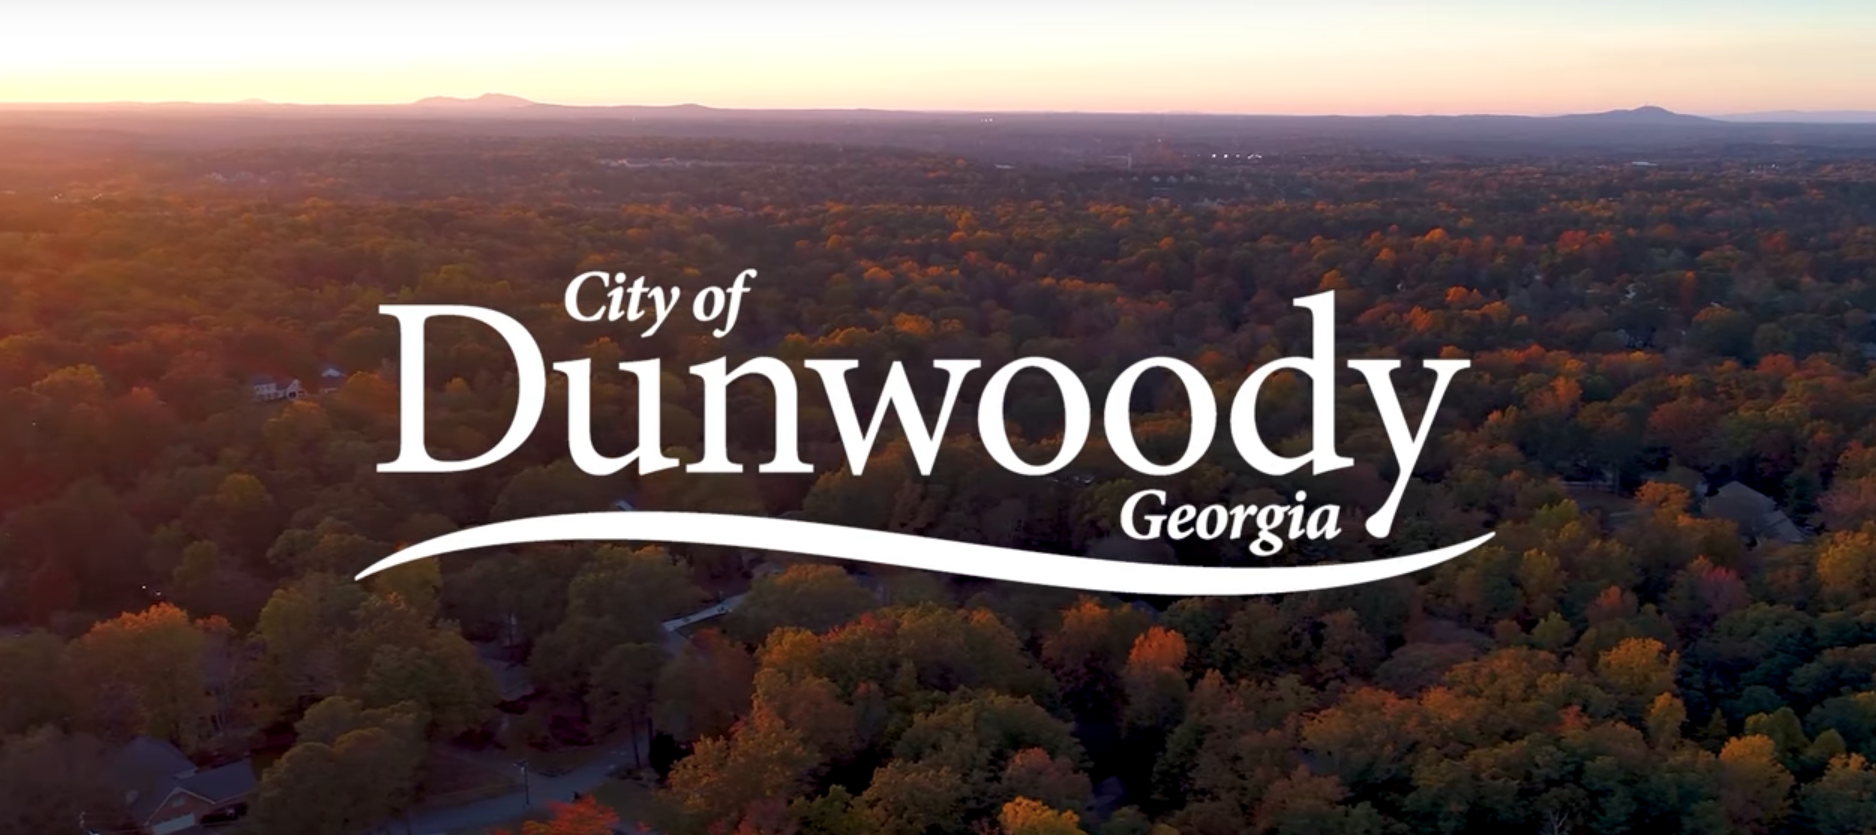 Dunwoody, Georgia!